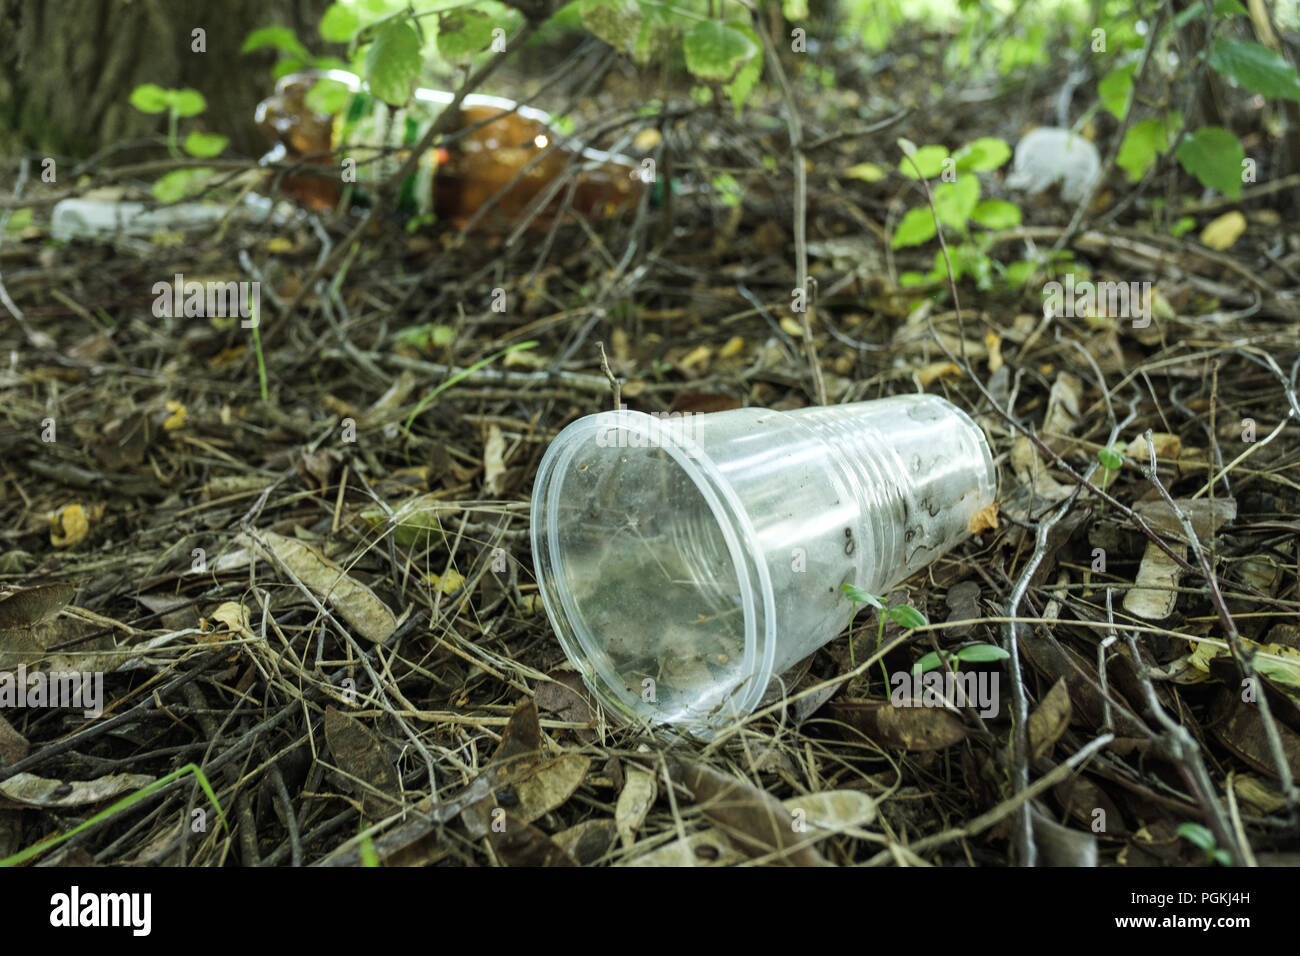 Plastic debris pollutes the nature. Plastic cup. Stock Photo